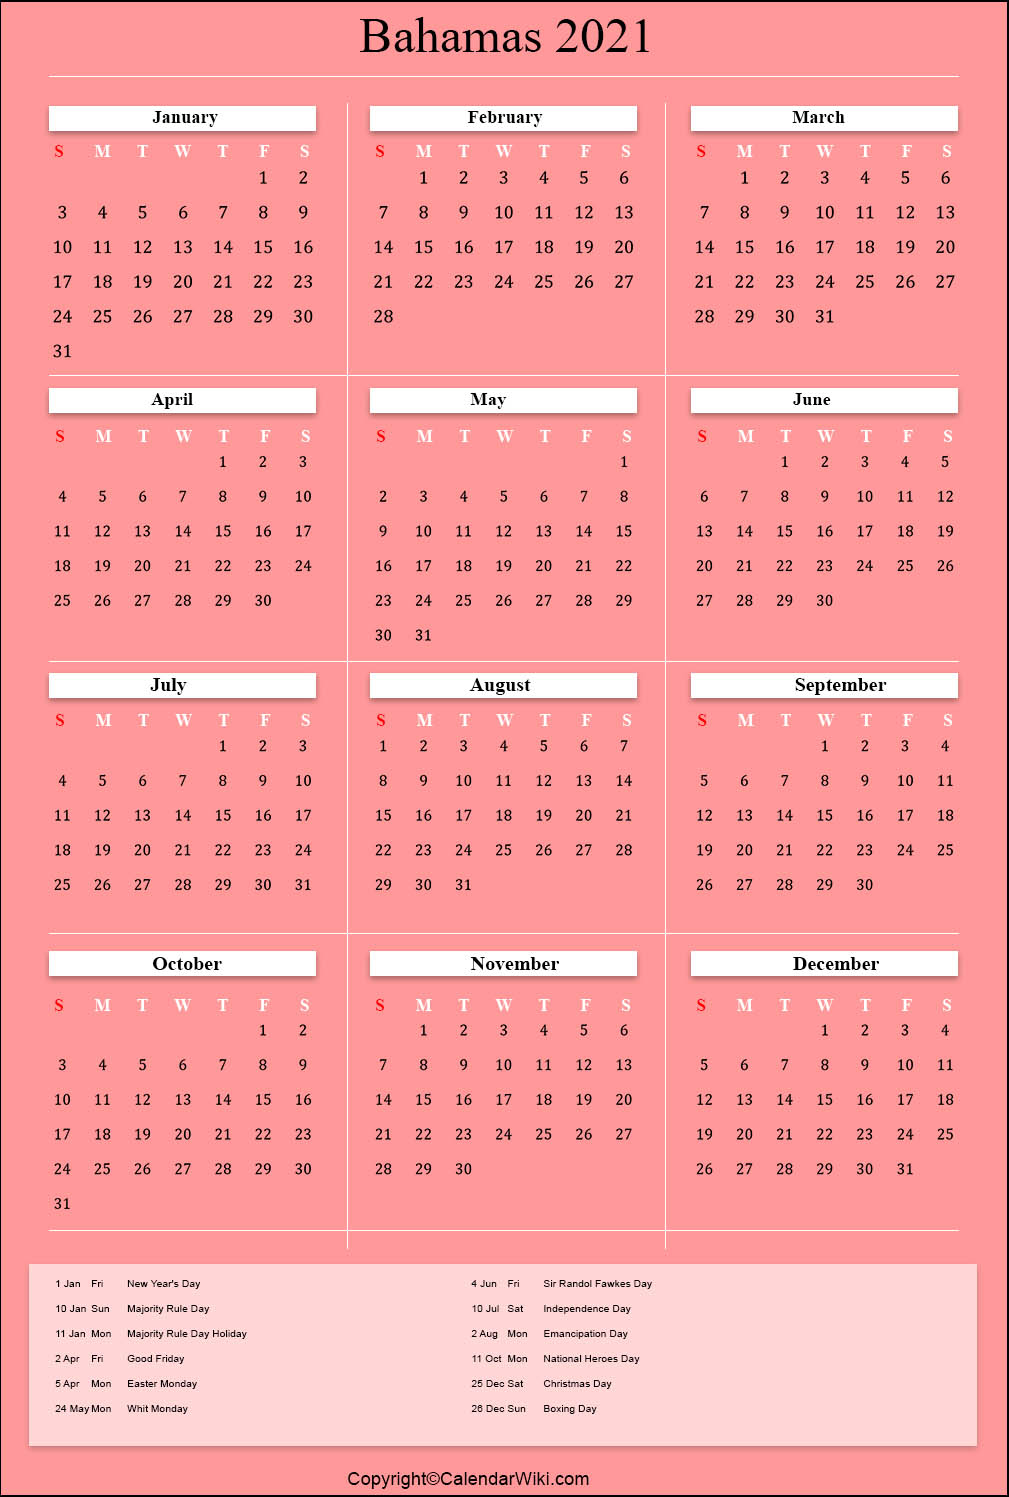 printable-bahamas-calendar-2021-with-holidays-public-holidays